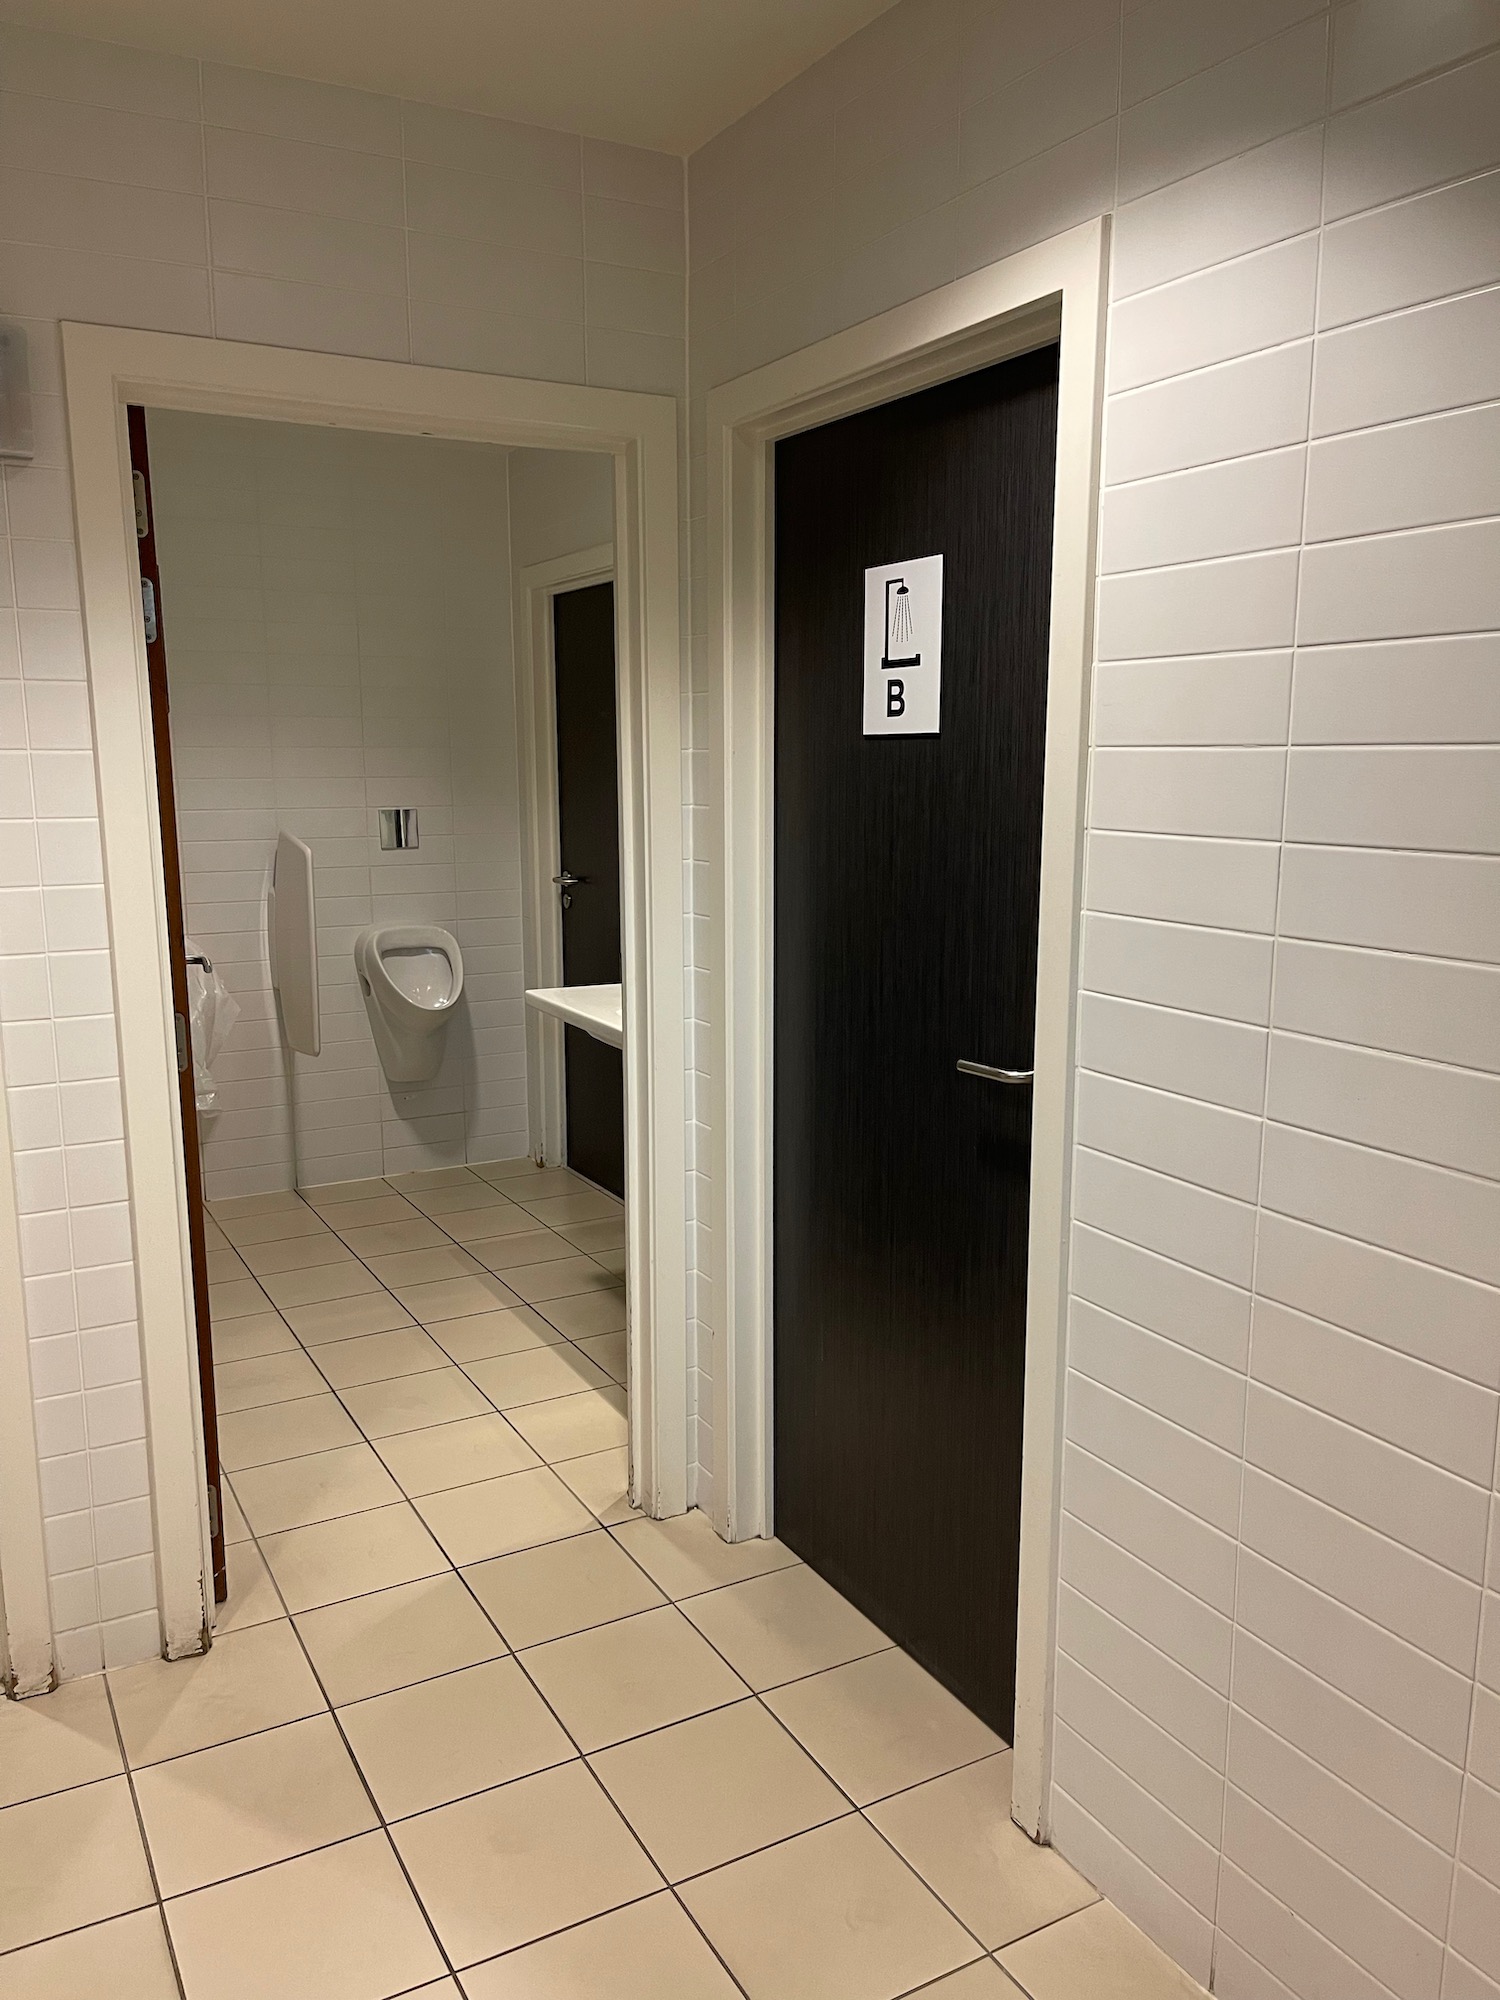 a bathroom with a urinal and a urinal